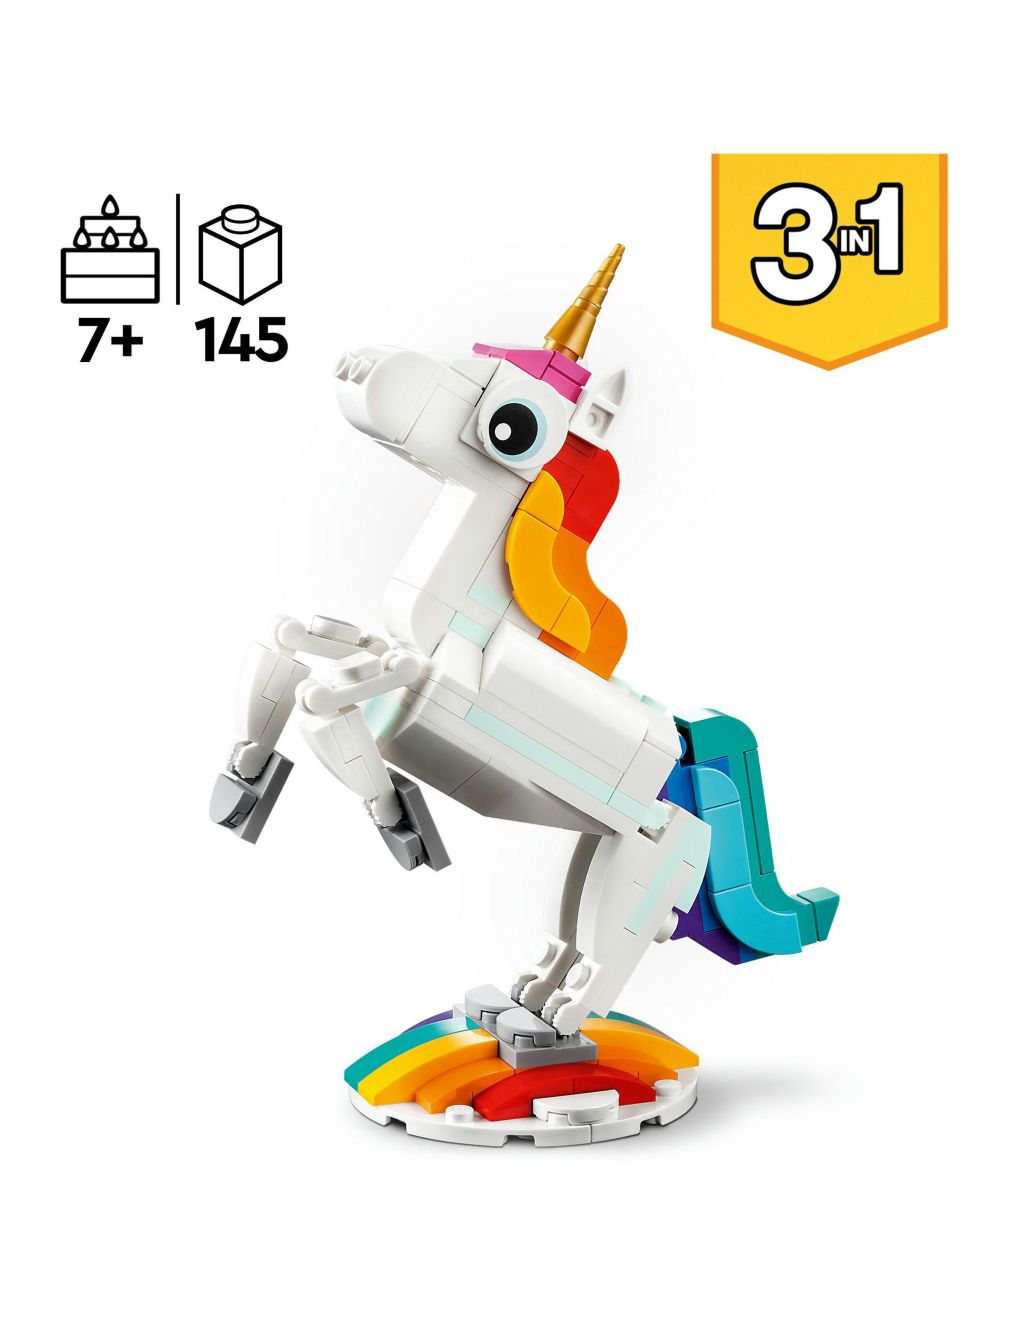 LEGO Creator 3 in 1 Magical Unicorn Toy Set (7+ Yrs) image 2